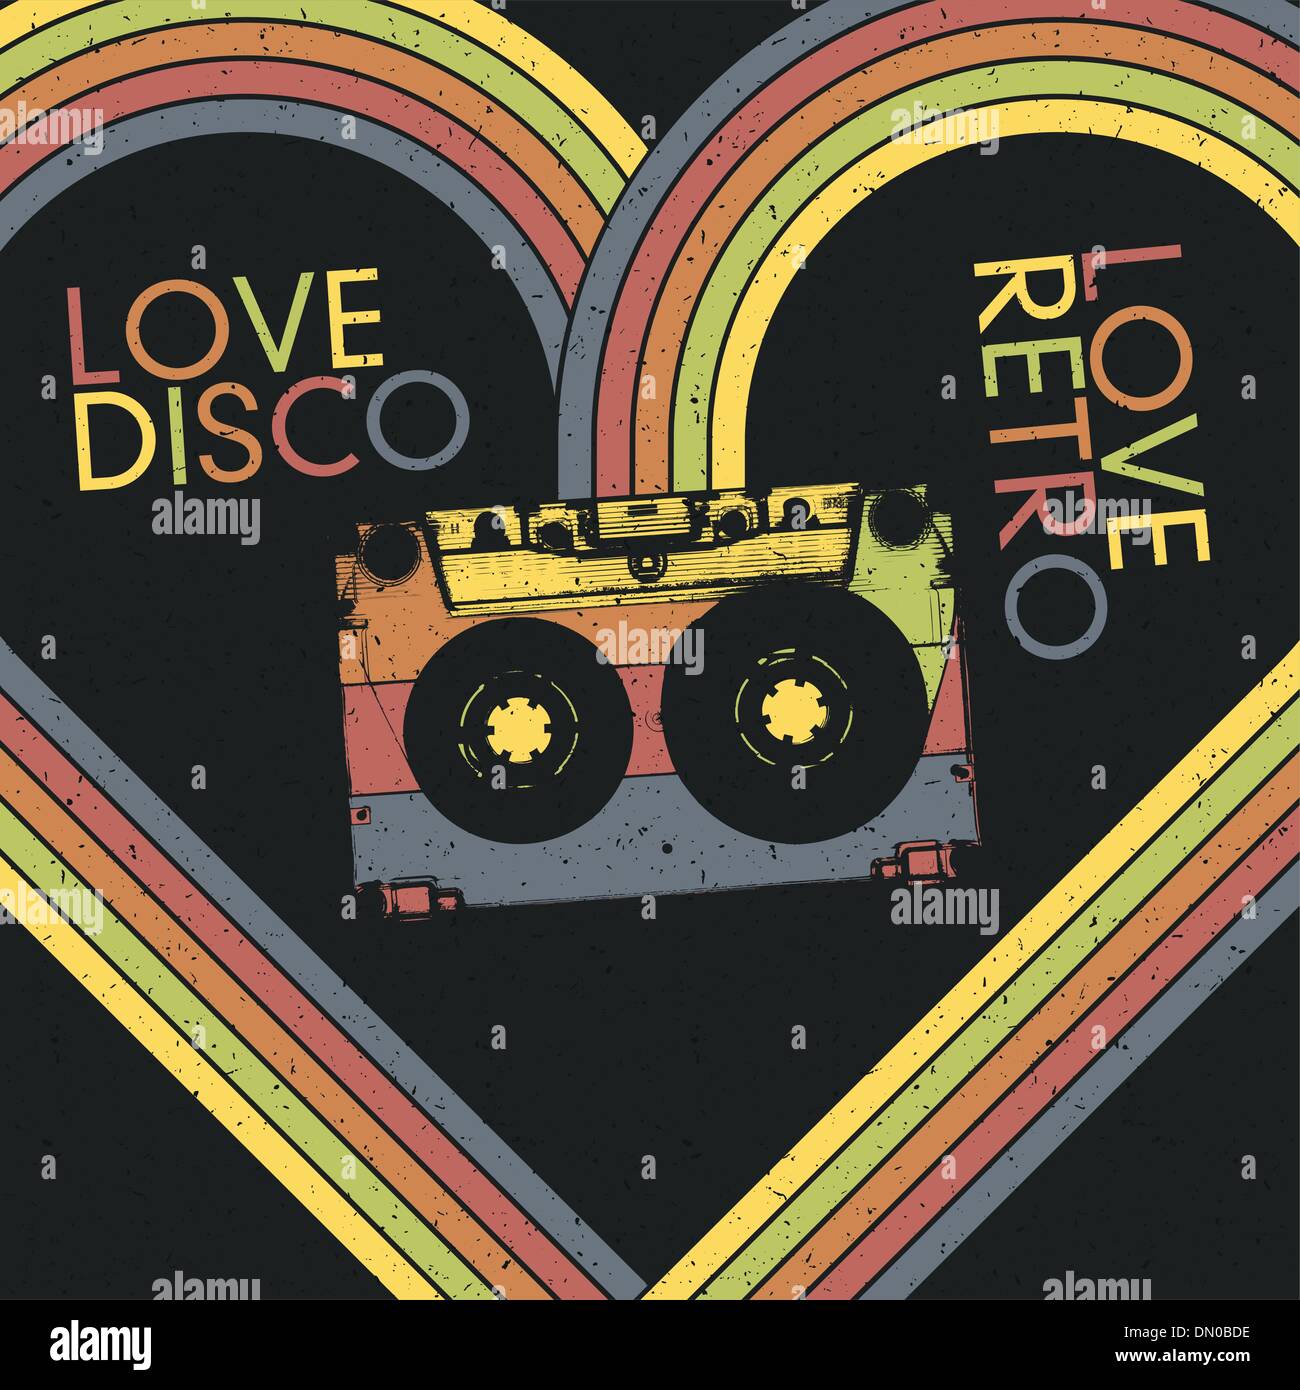 Love Disco Love Retro Vintage Poster Design Template Vector Stock